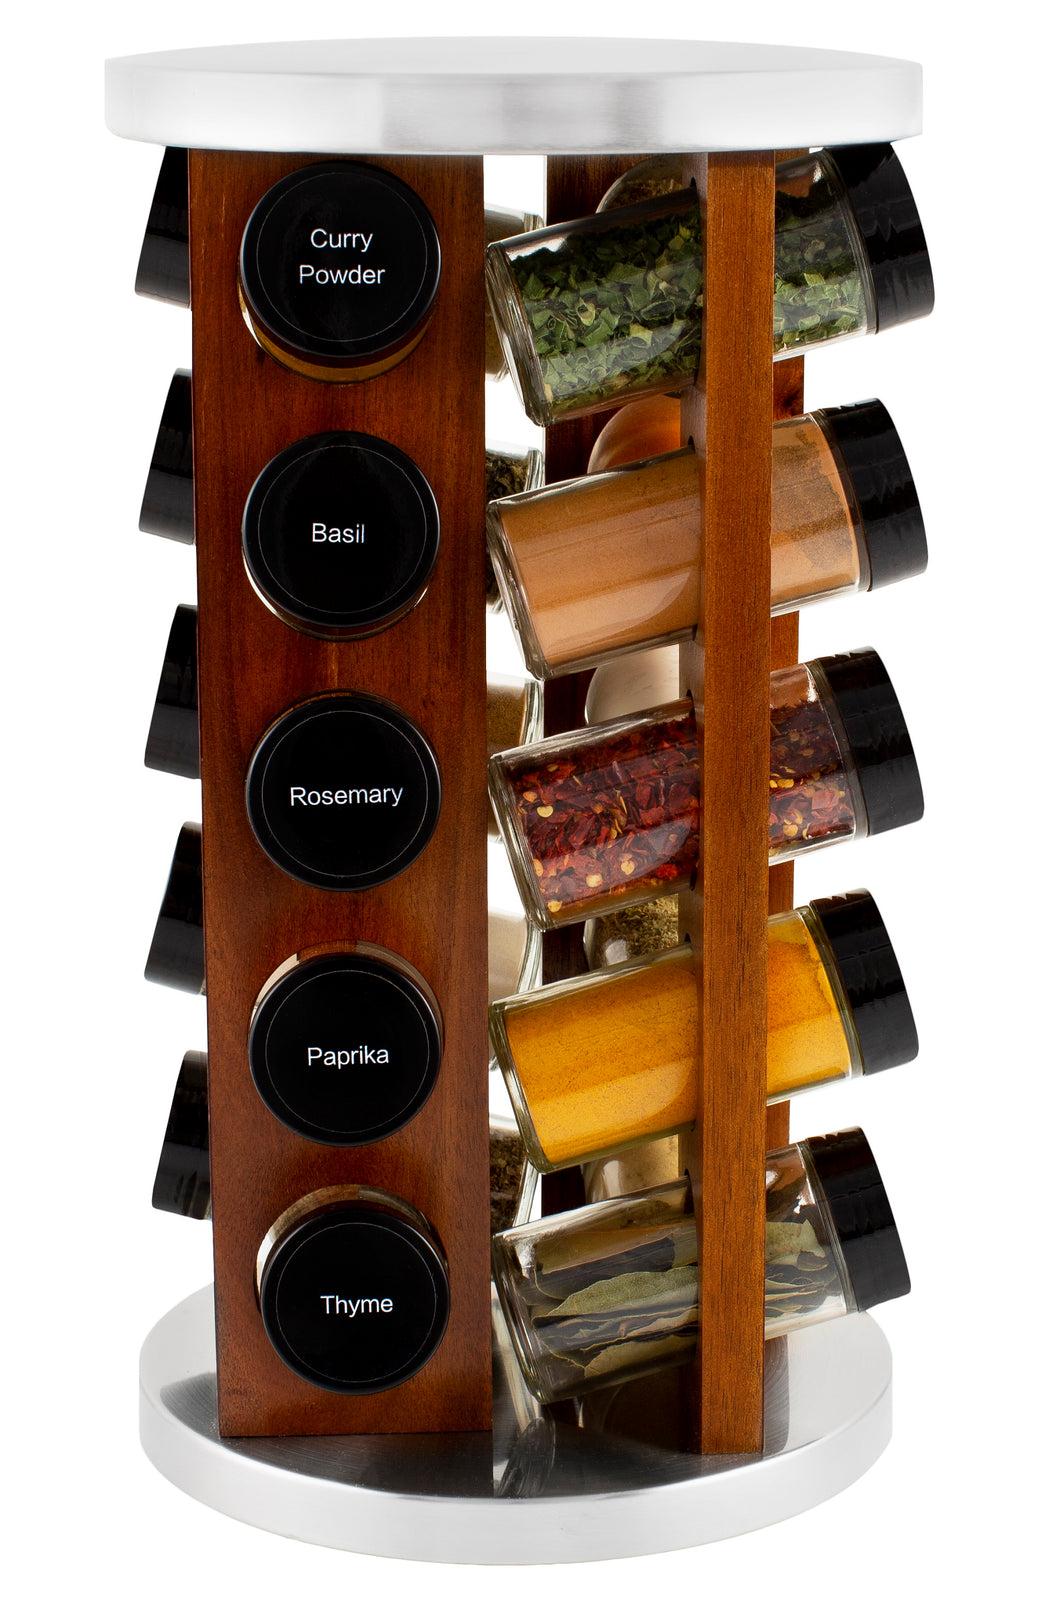 20 Jar Spice Rack in Dark Acacia Wood with Custom Spices - My Spice Racks